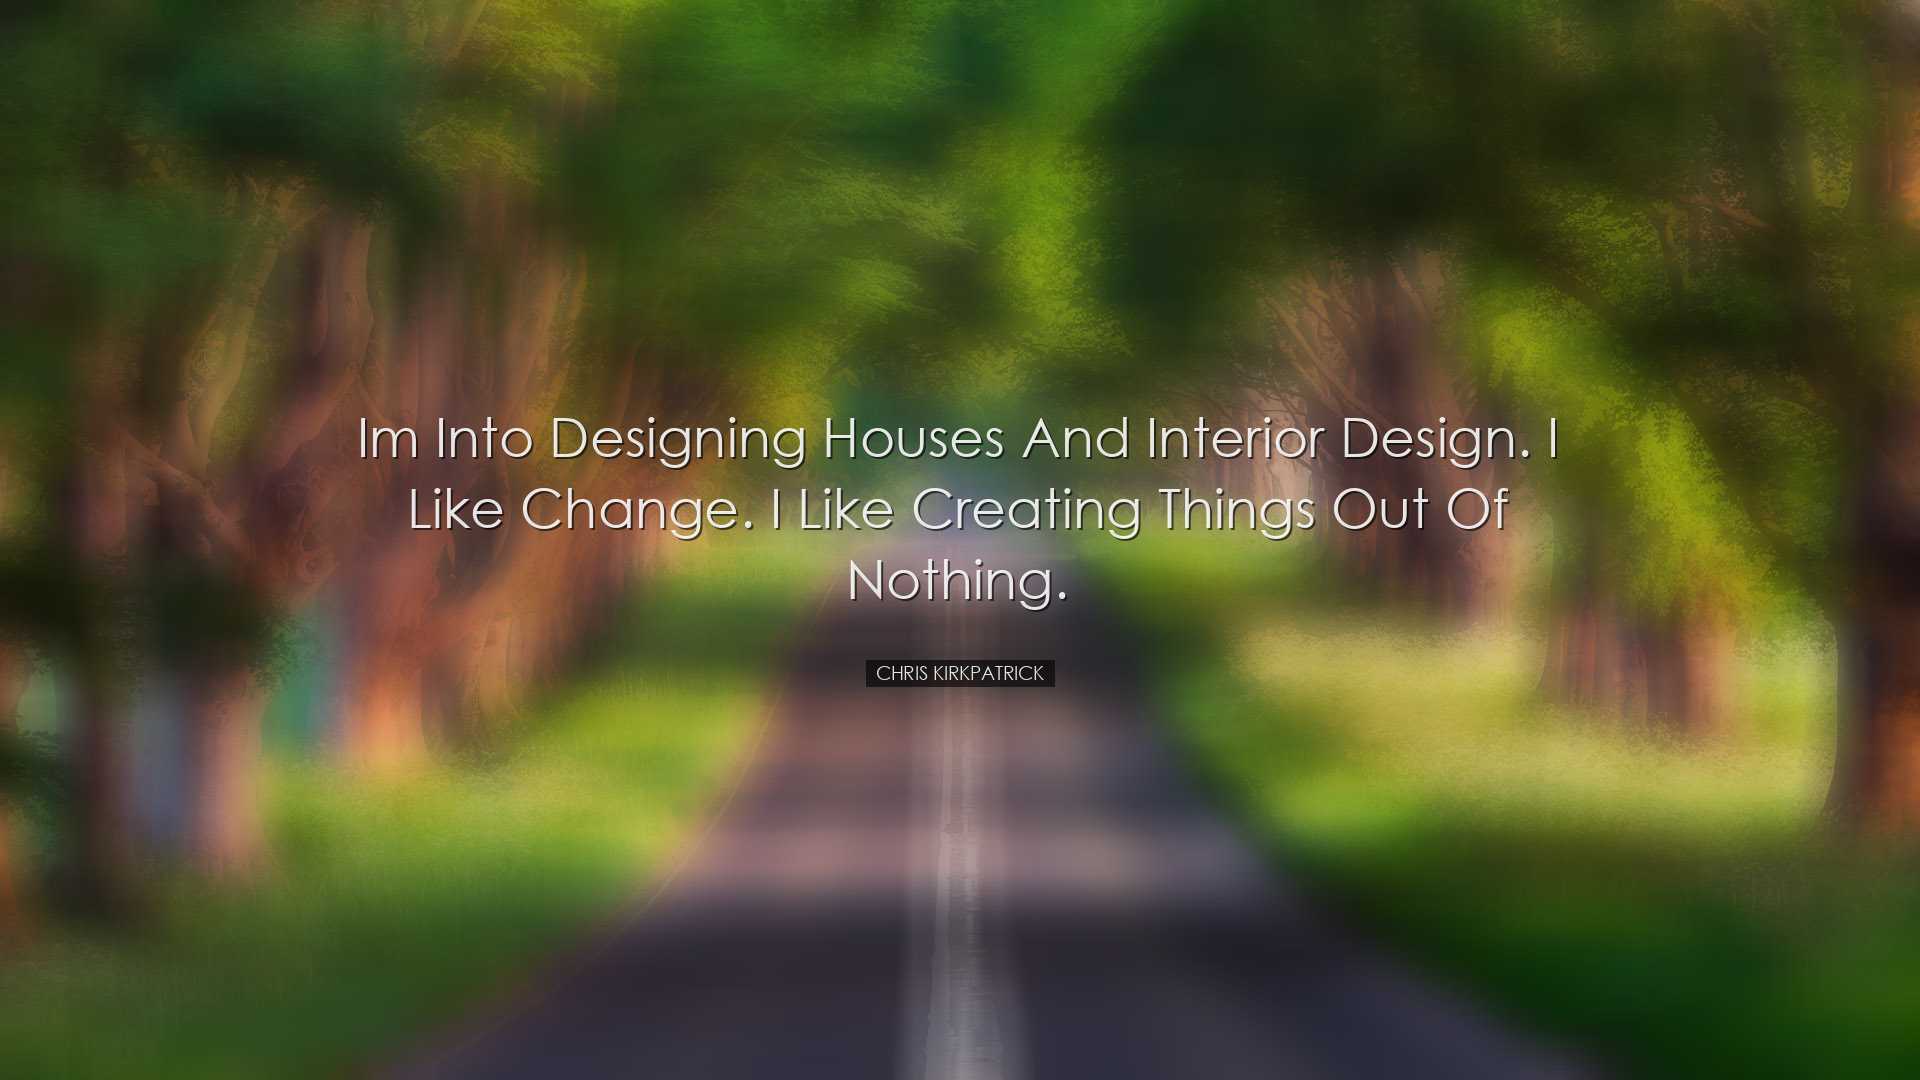 Im into designing houses and interior design. I like change. I lik